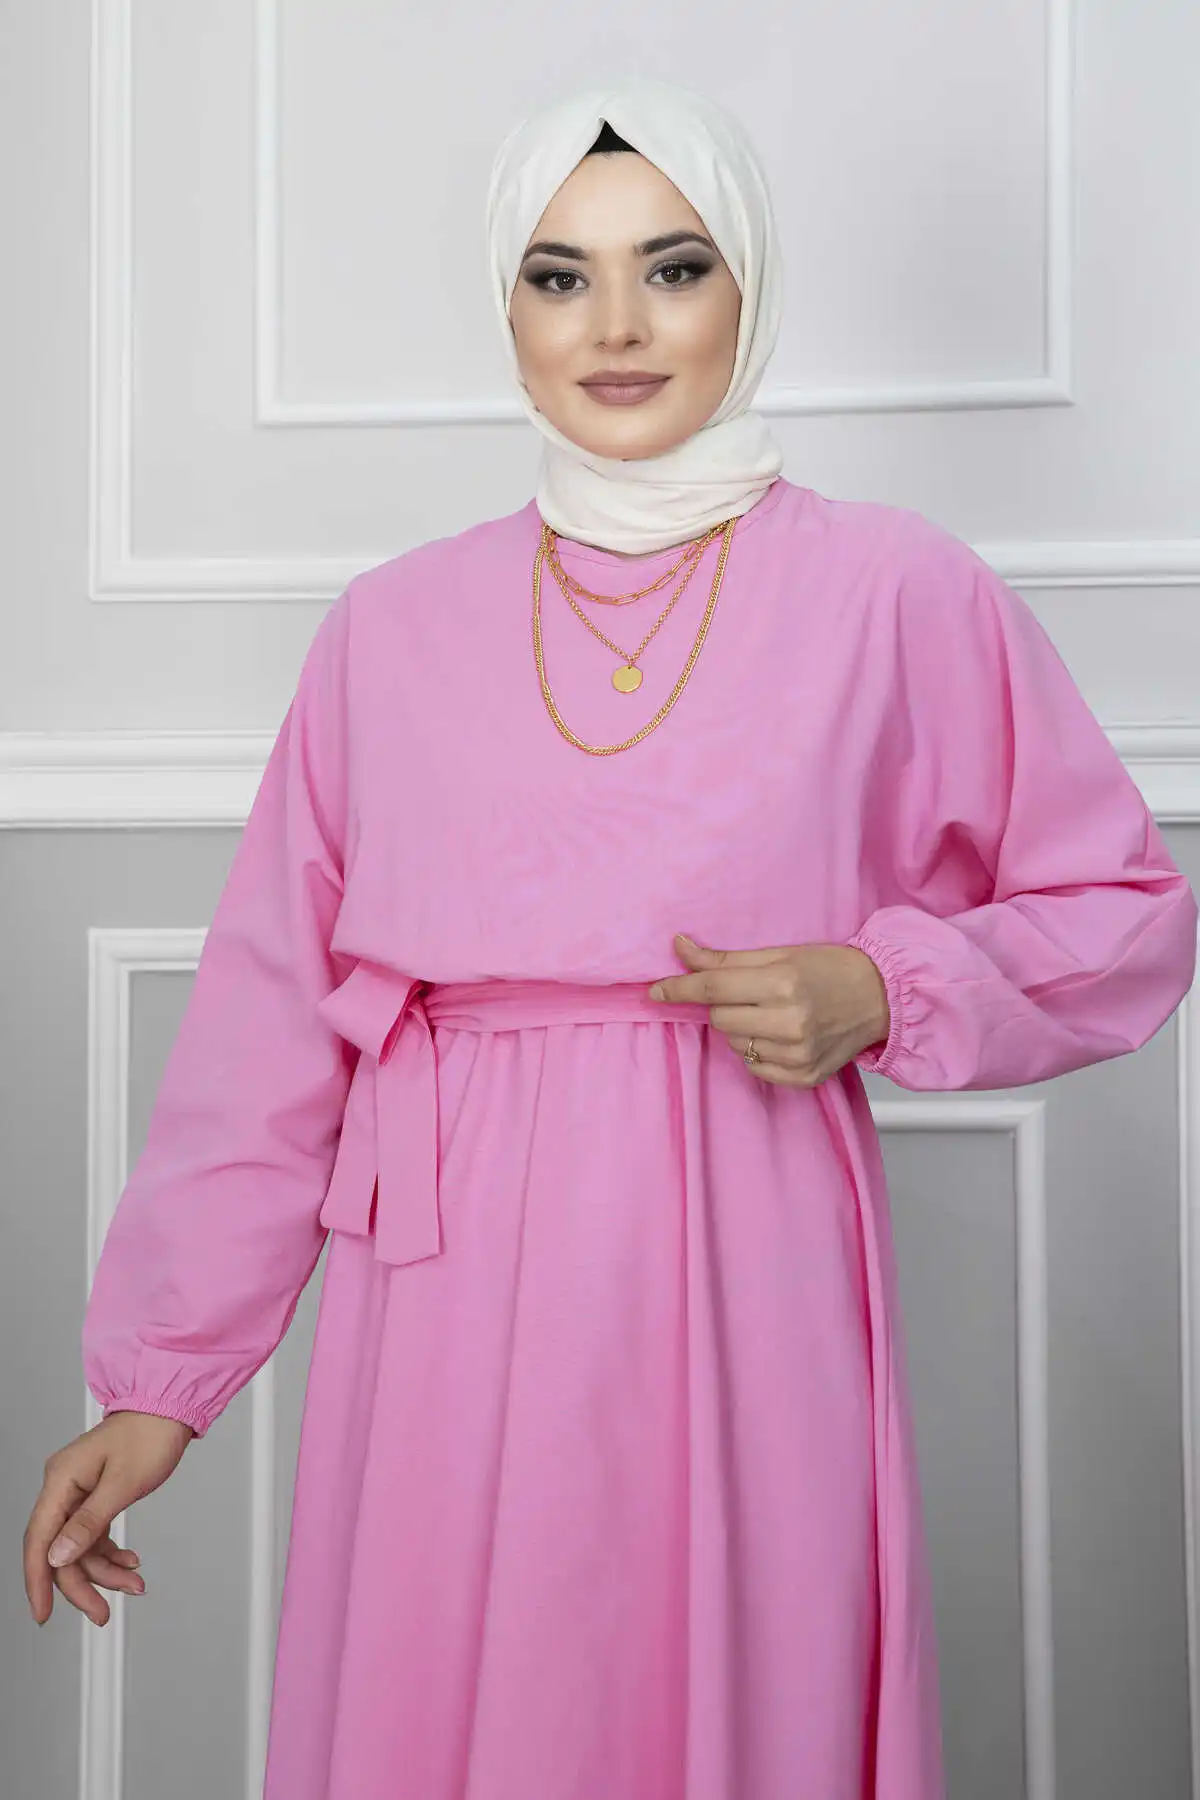 Stone Detailed Mesh Hijab Dress Abaya, Abaya for women, Muslim wedding dress, Modest wedding dress, modest dress